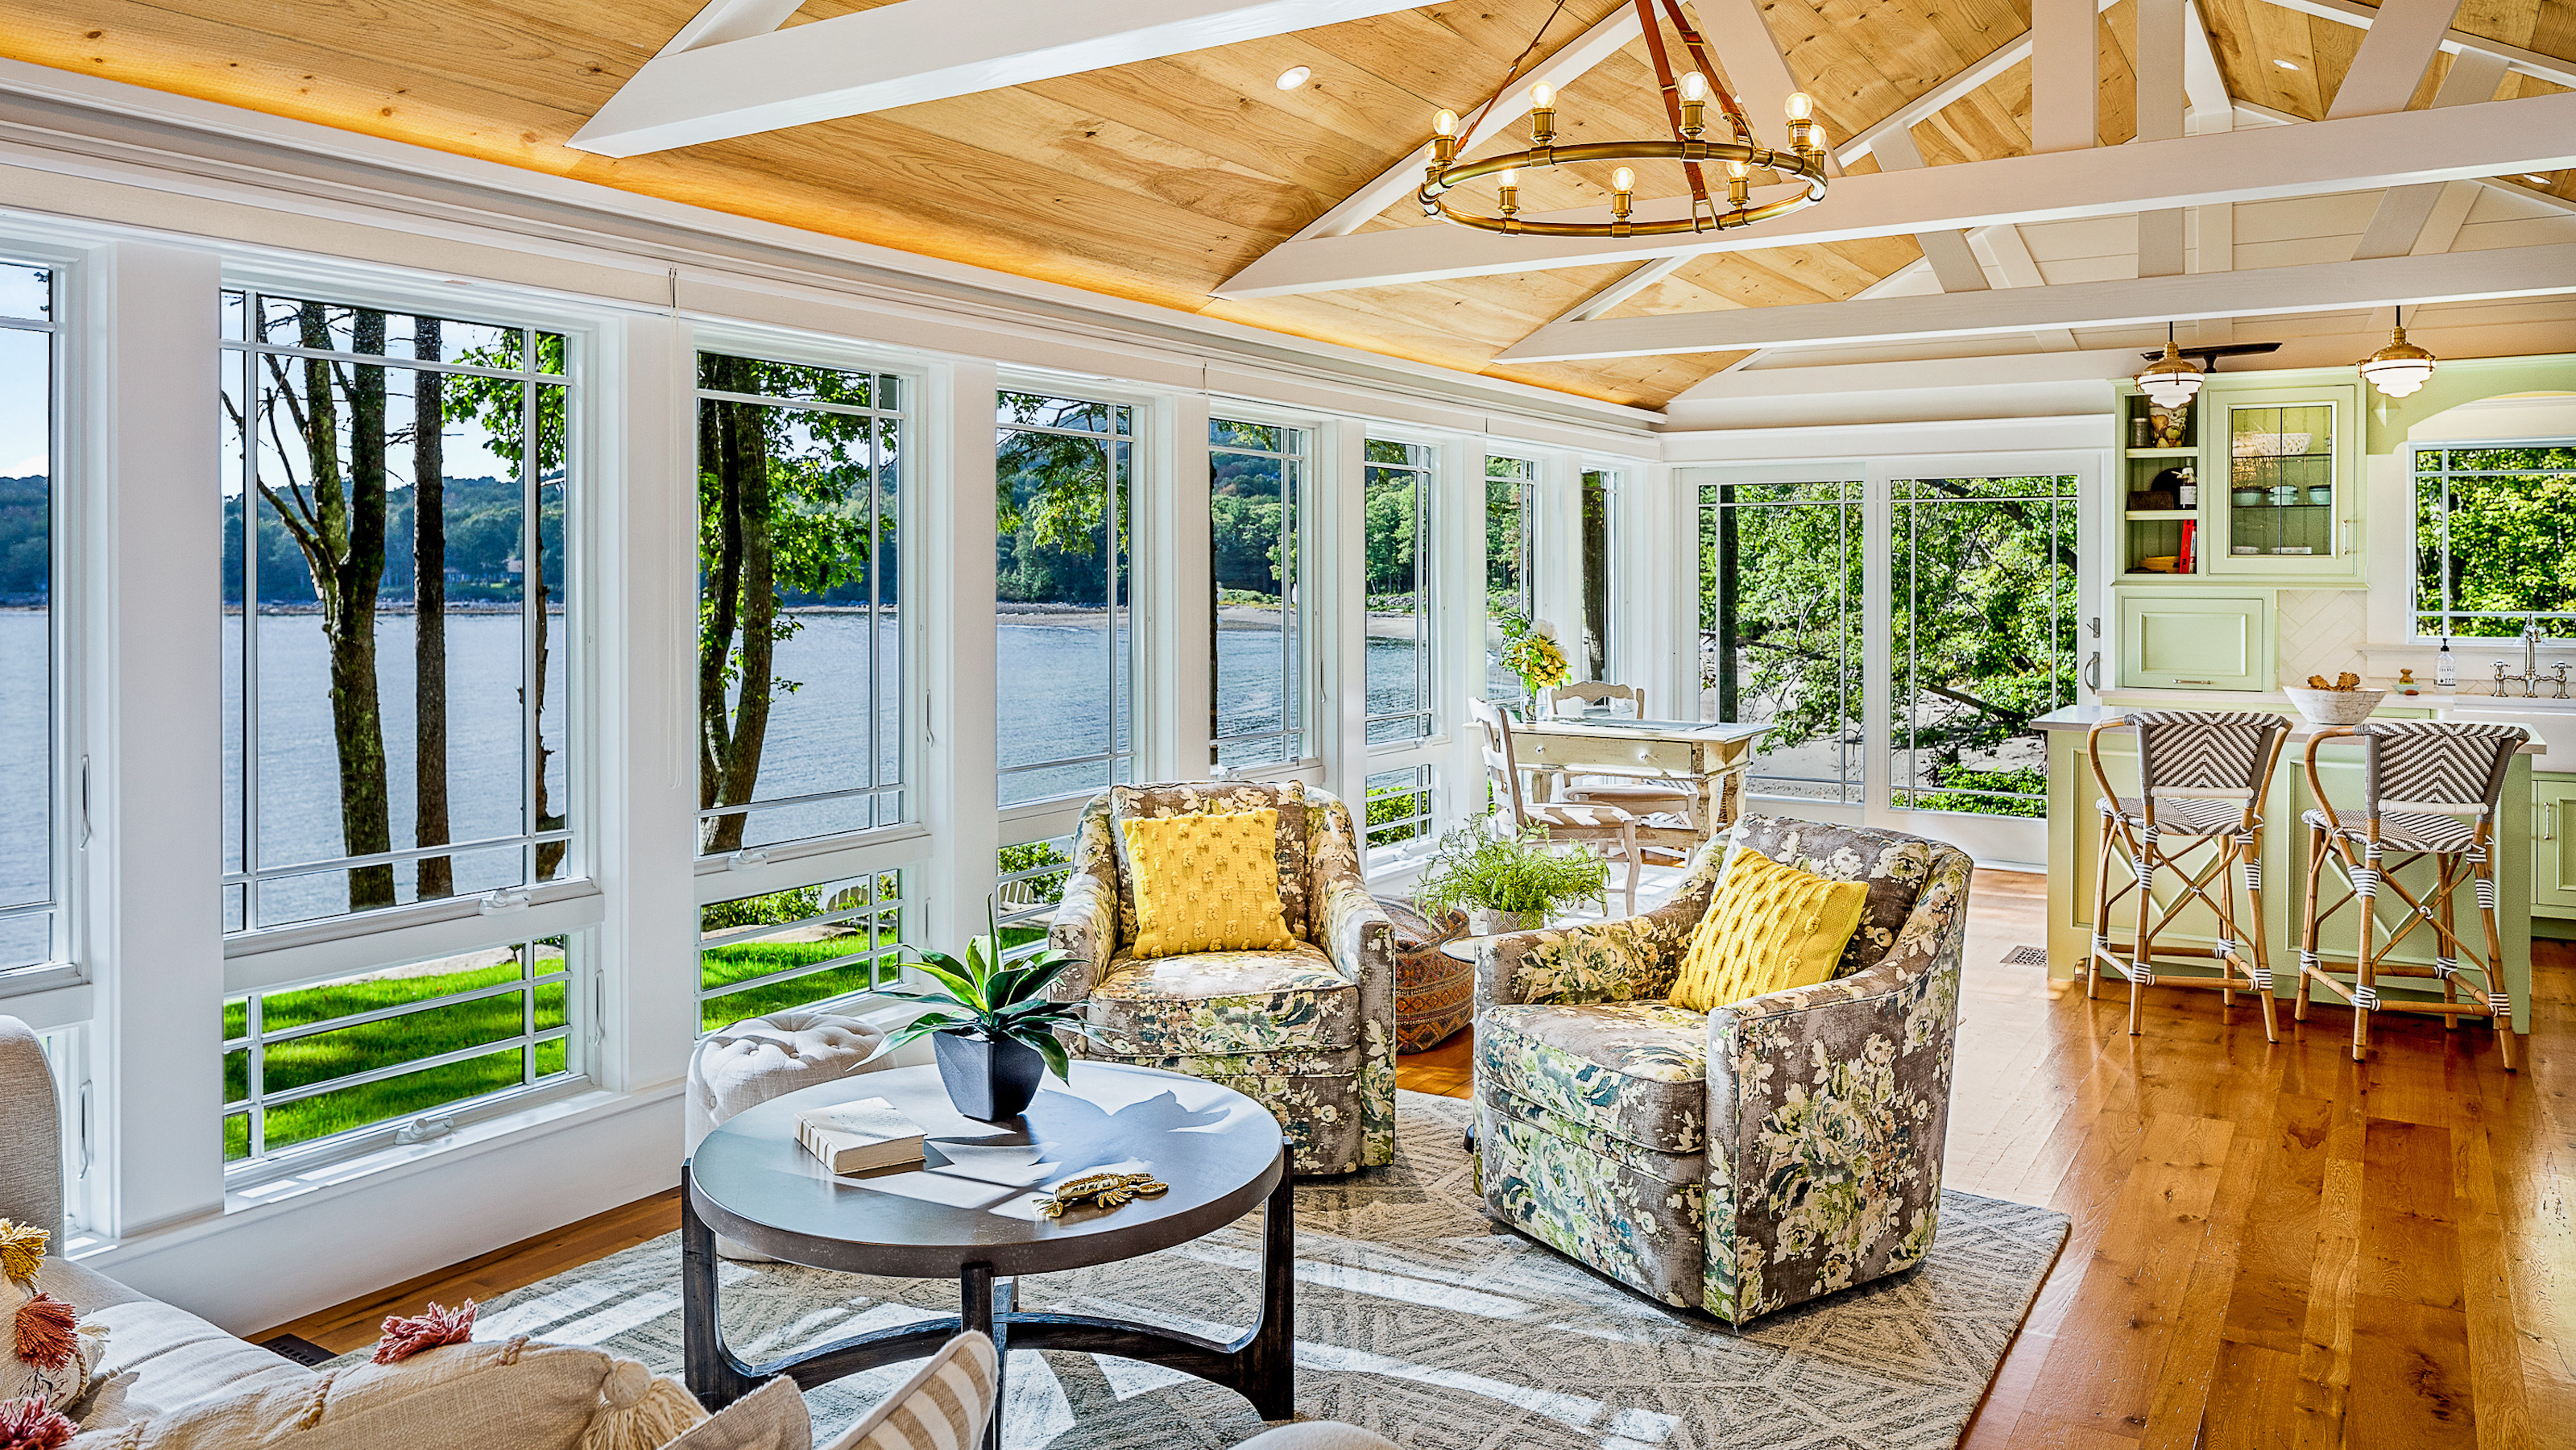 Cape Cod living room ideas |